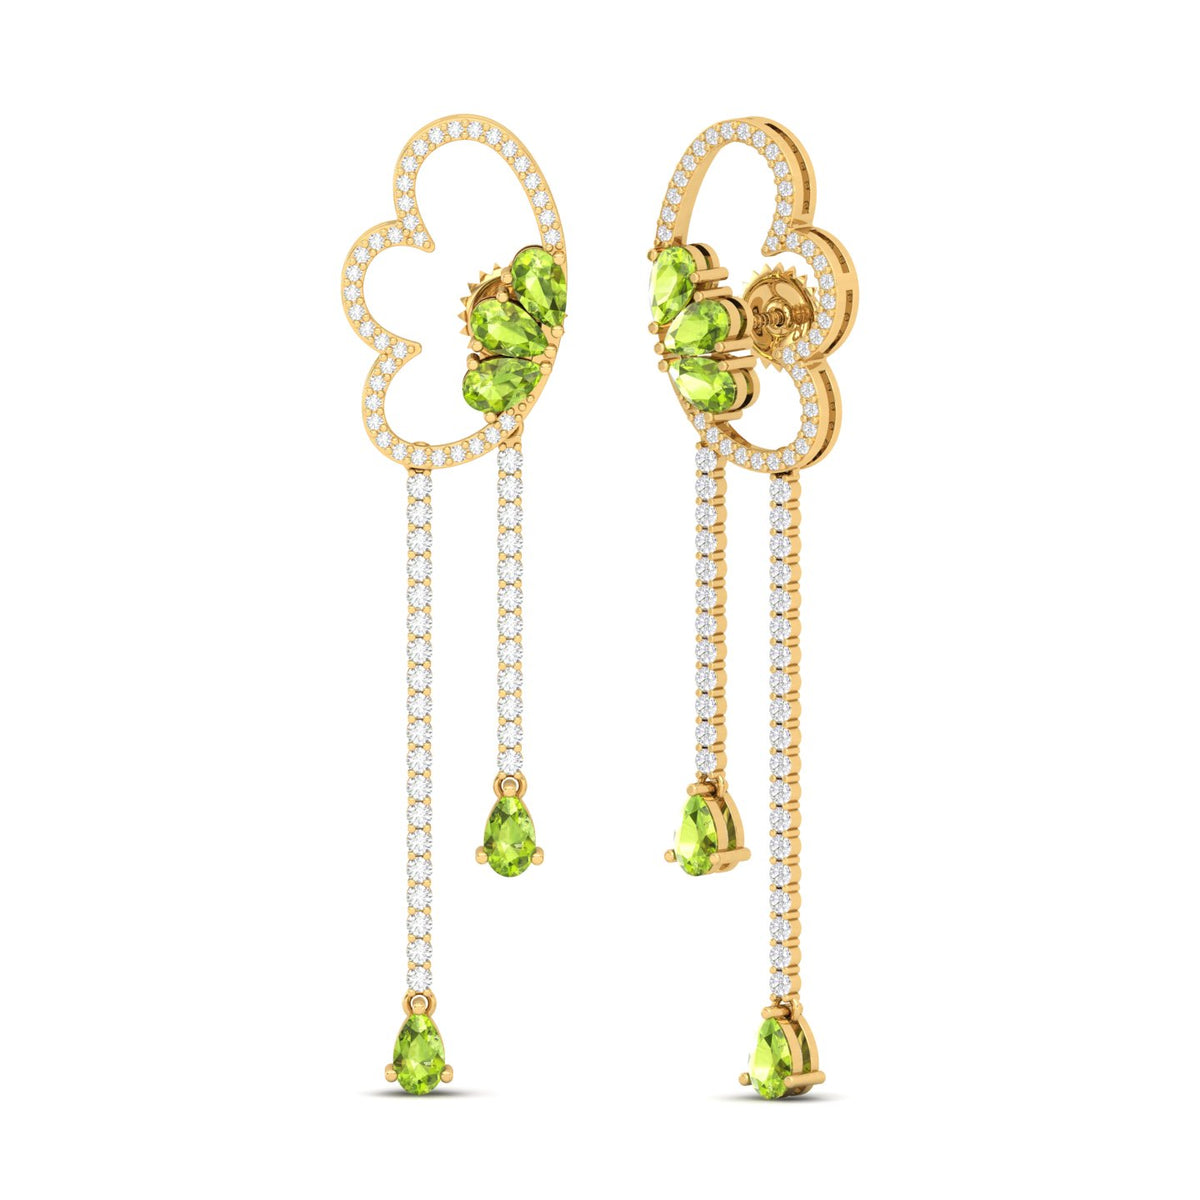 Maurya Papillon Drop Earrings with Peridot and Diamonds